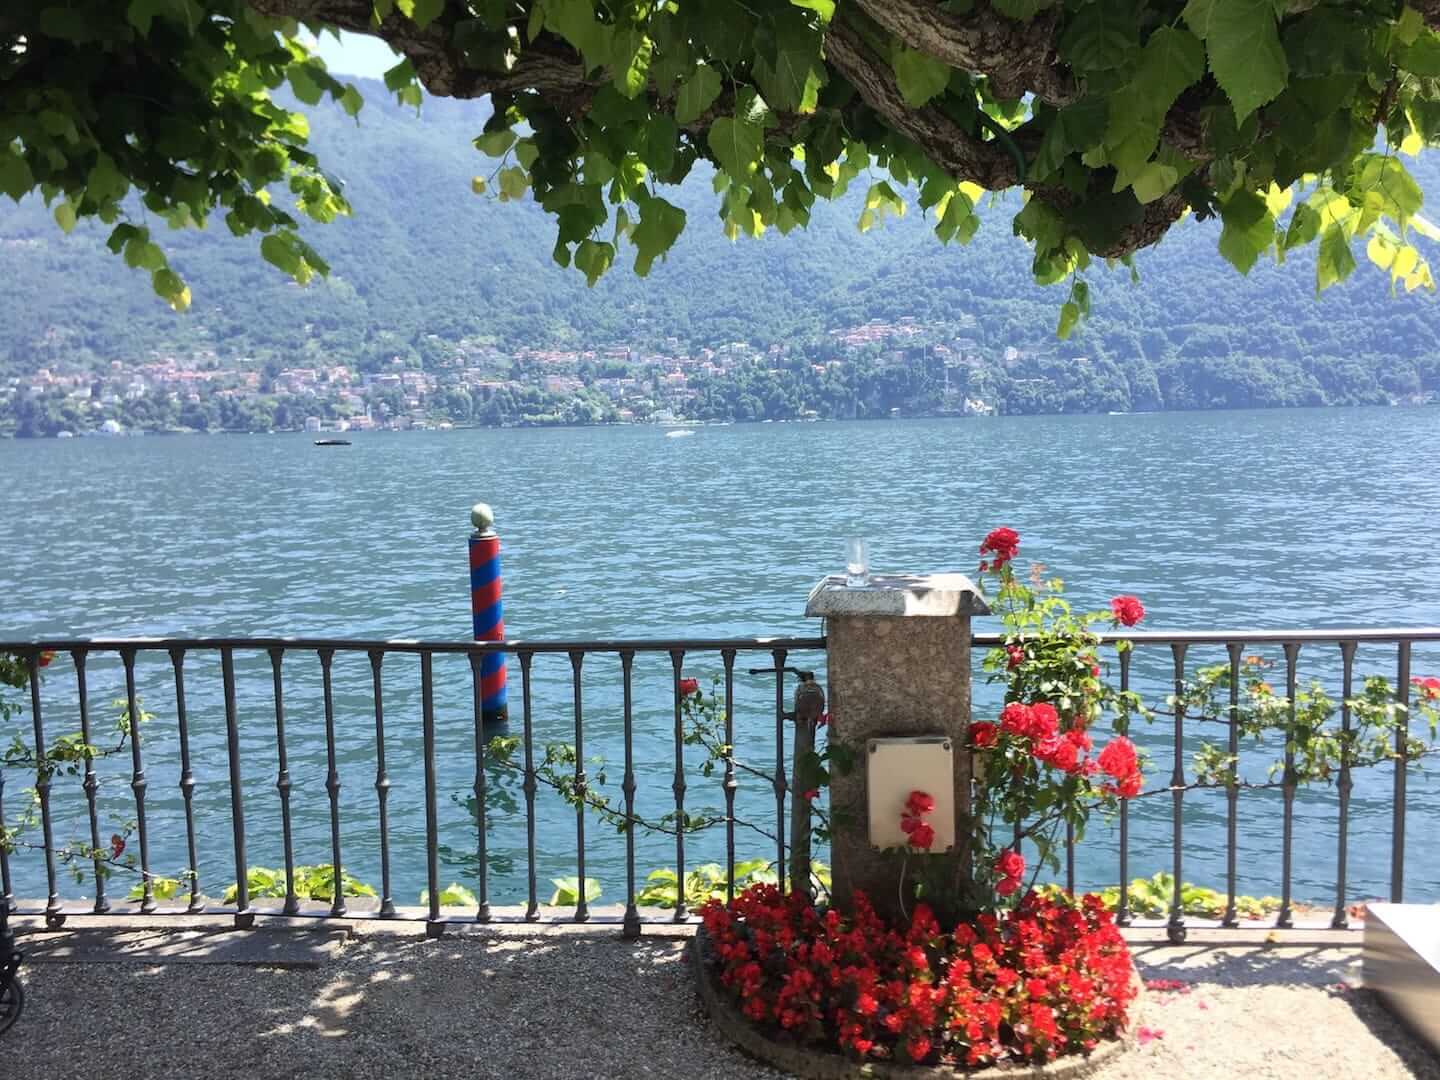 COMO Lake - сайт про озеро Комо в Италии